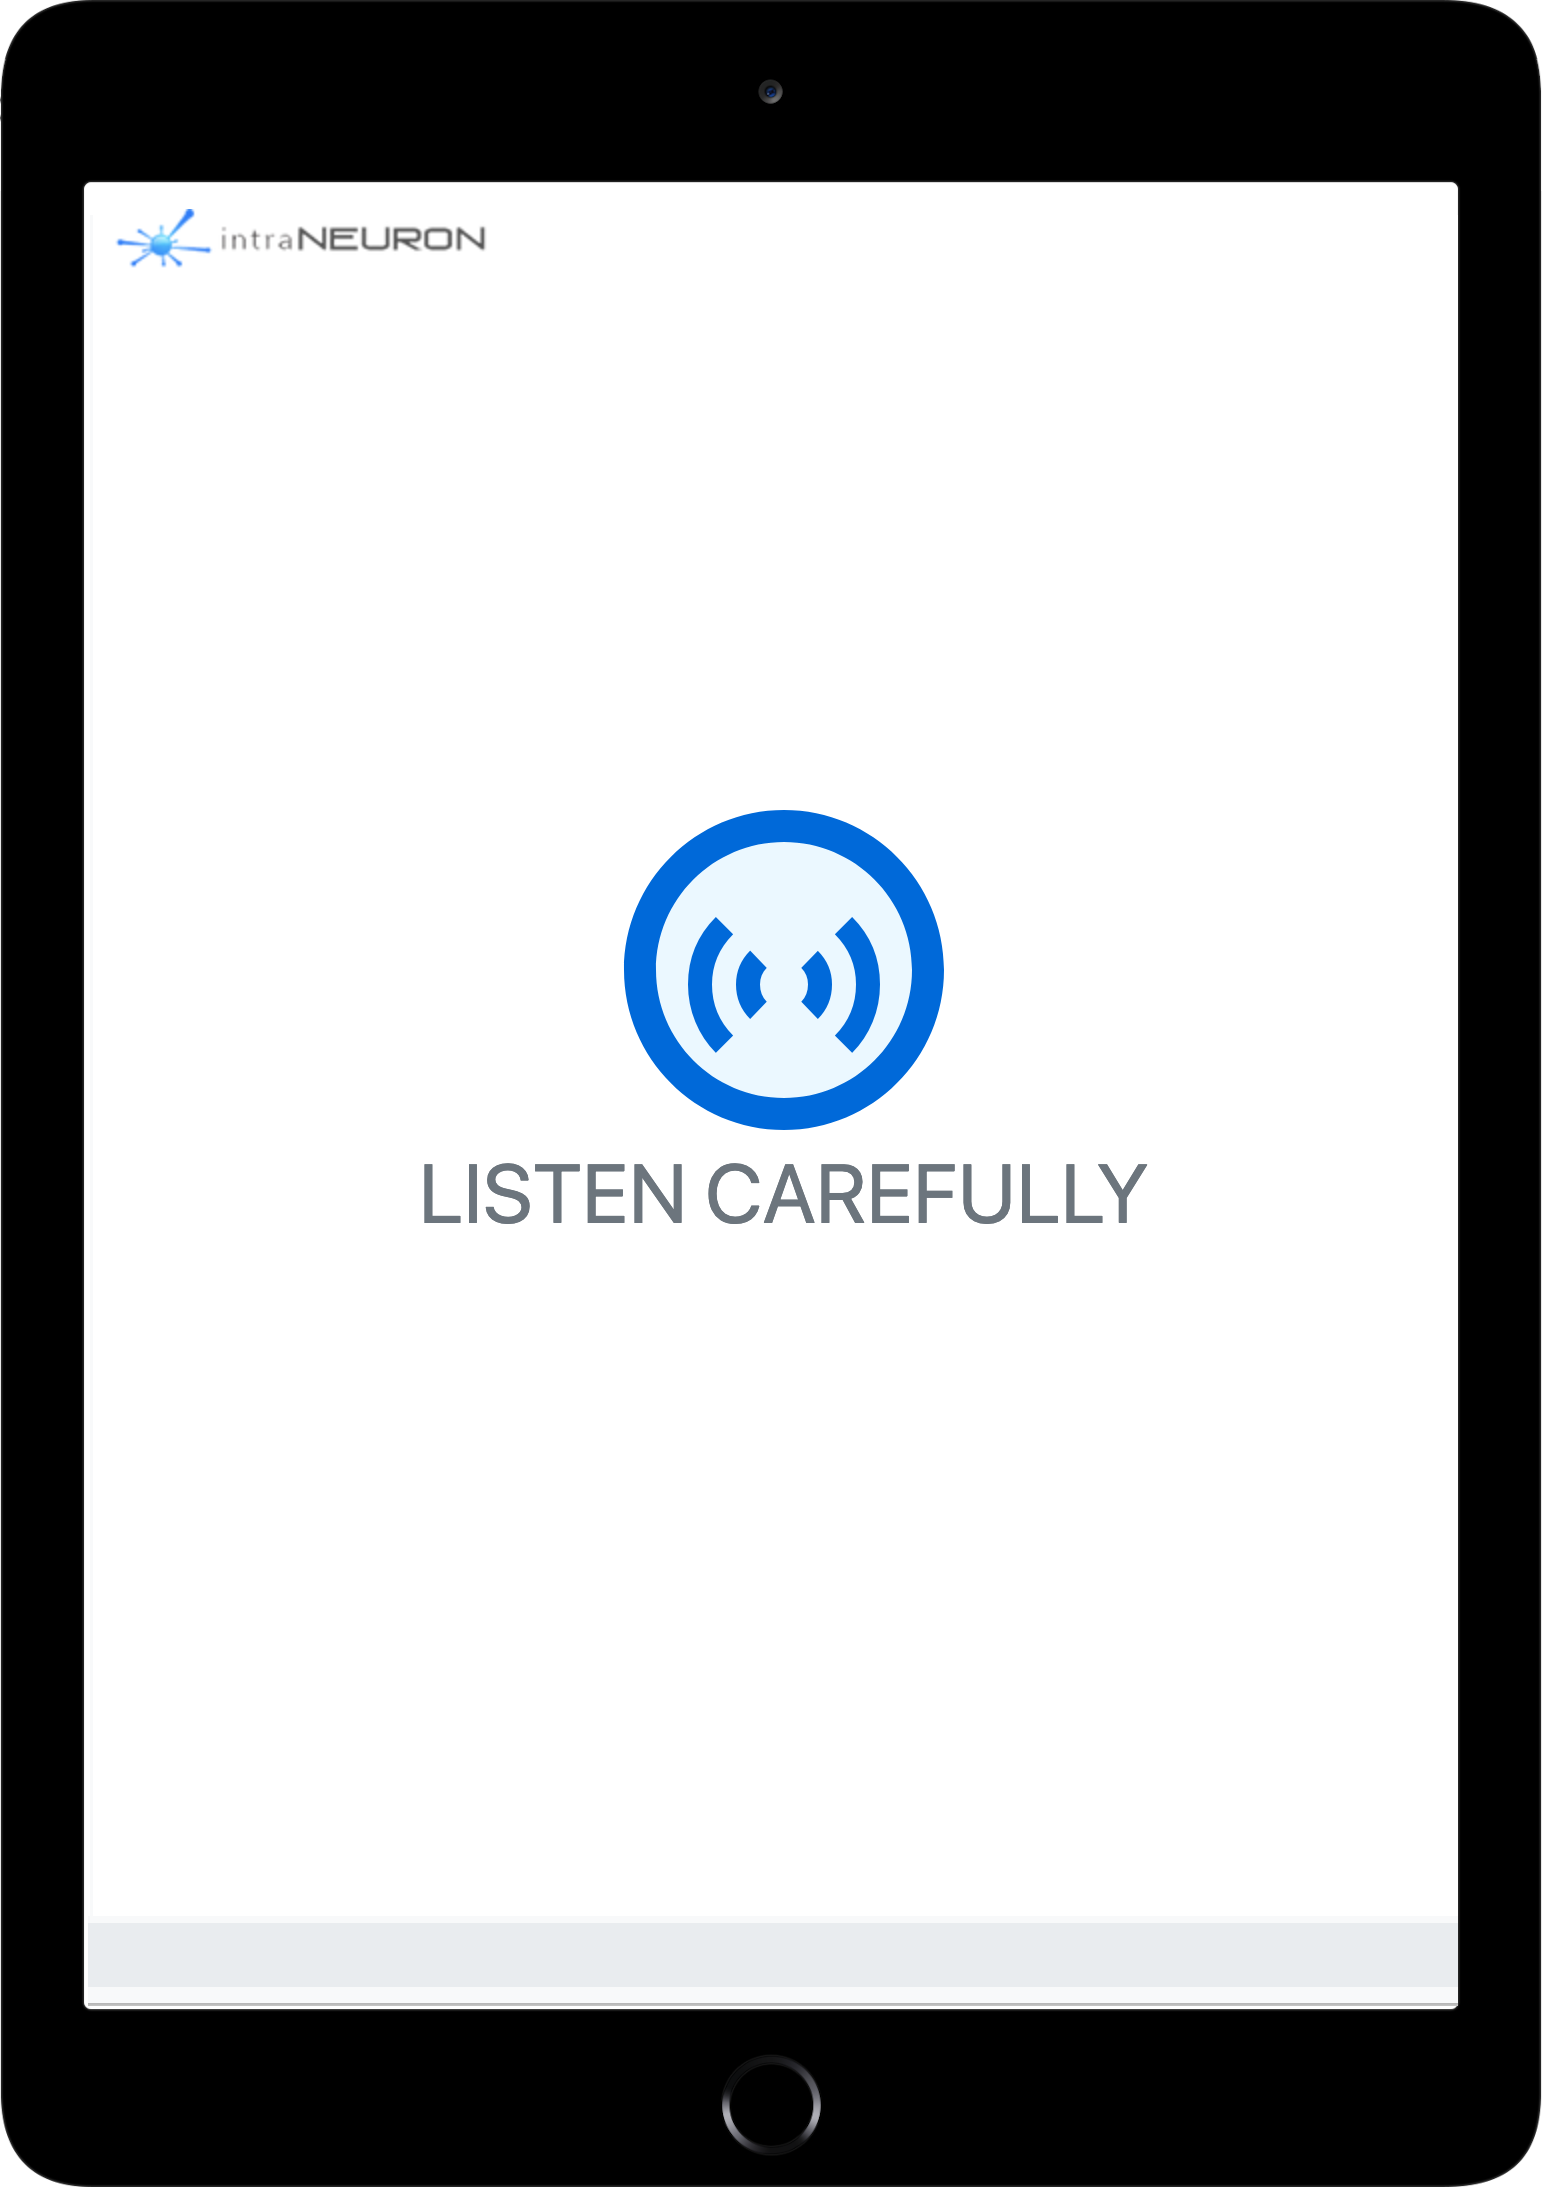 Listen Carefully screen shot on an ipad